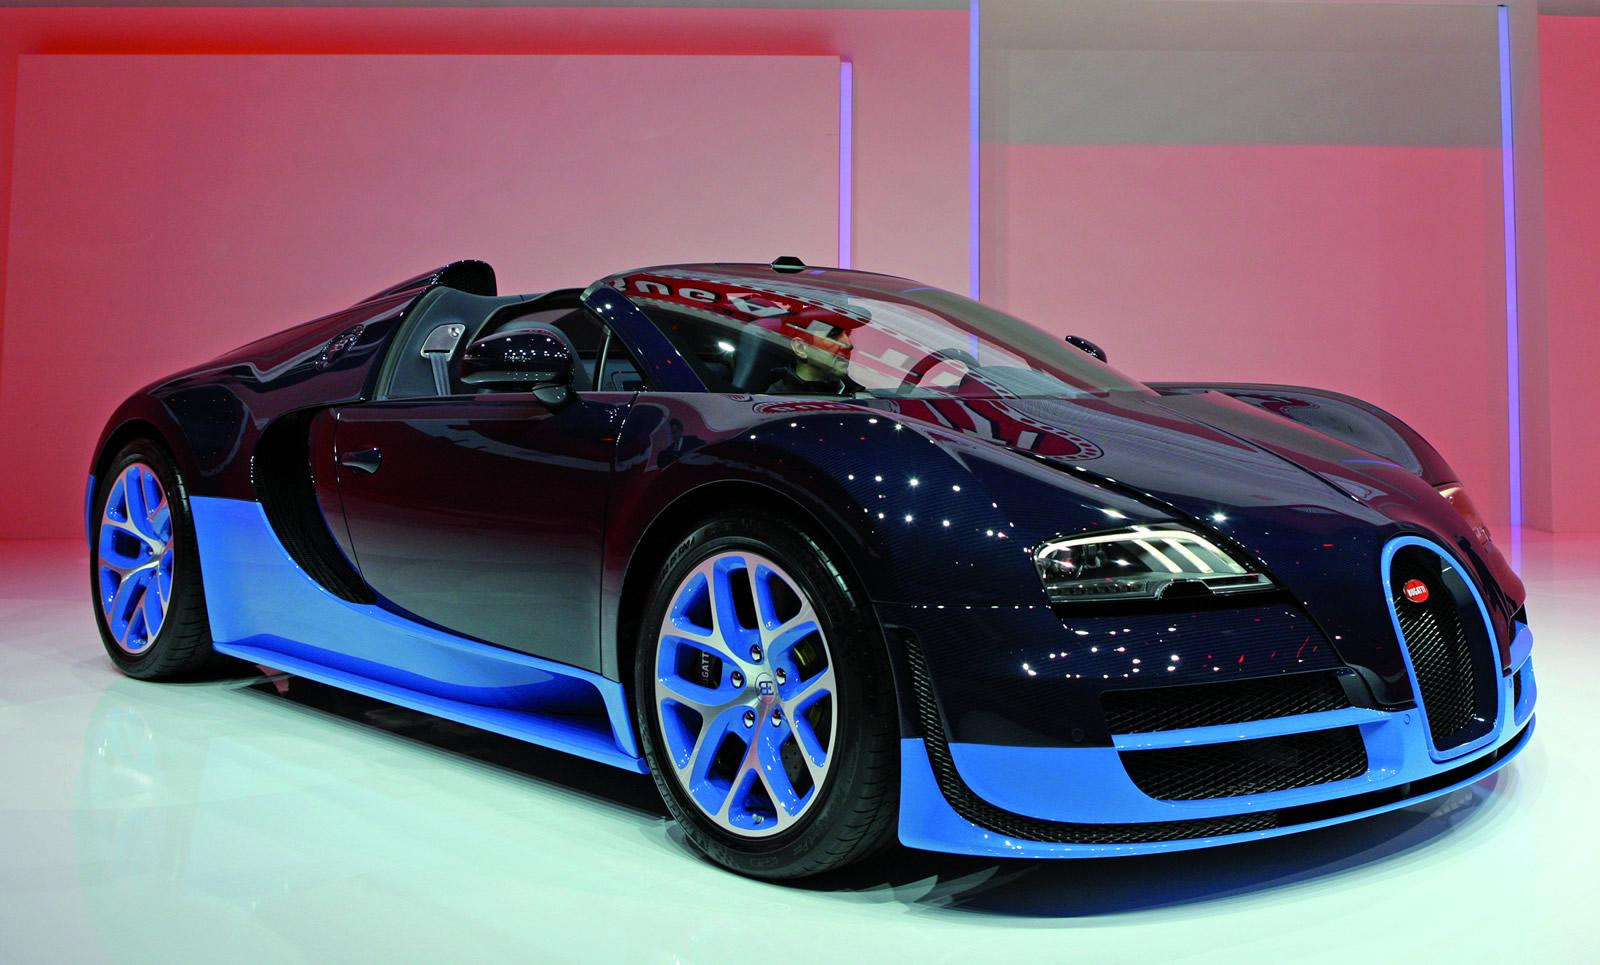 Gambar Modifikasi Mobil Bugatti Veyron Terbaru Dan Terupdate